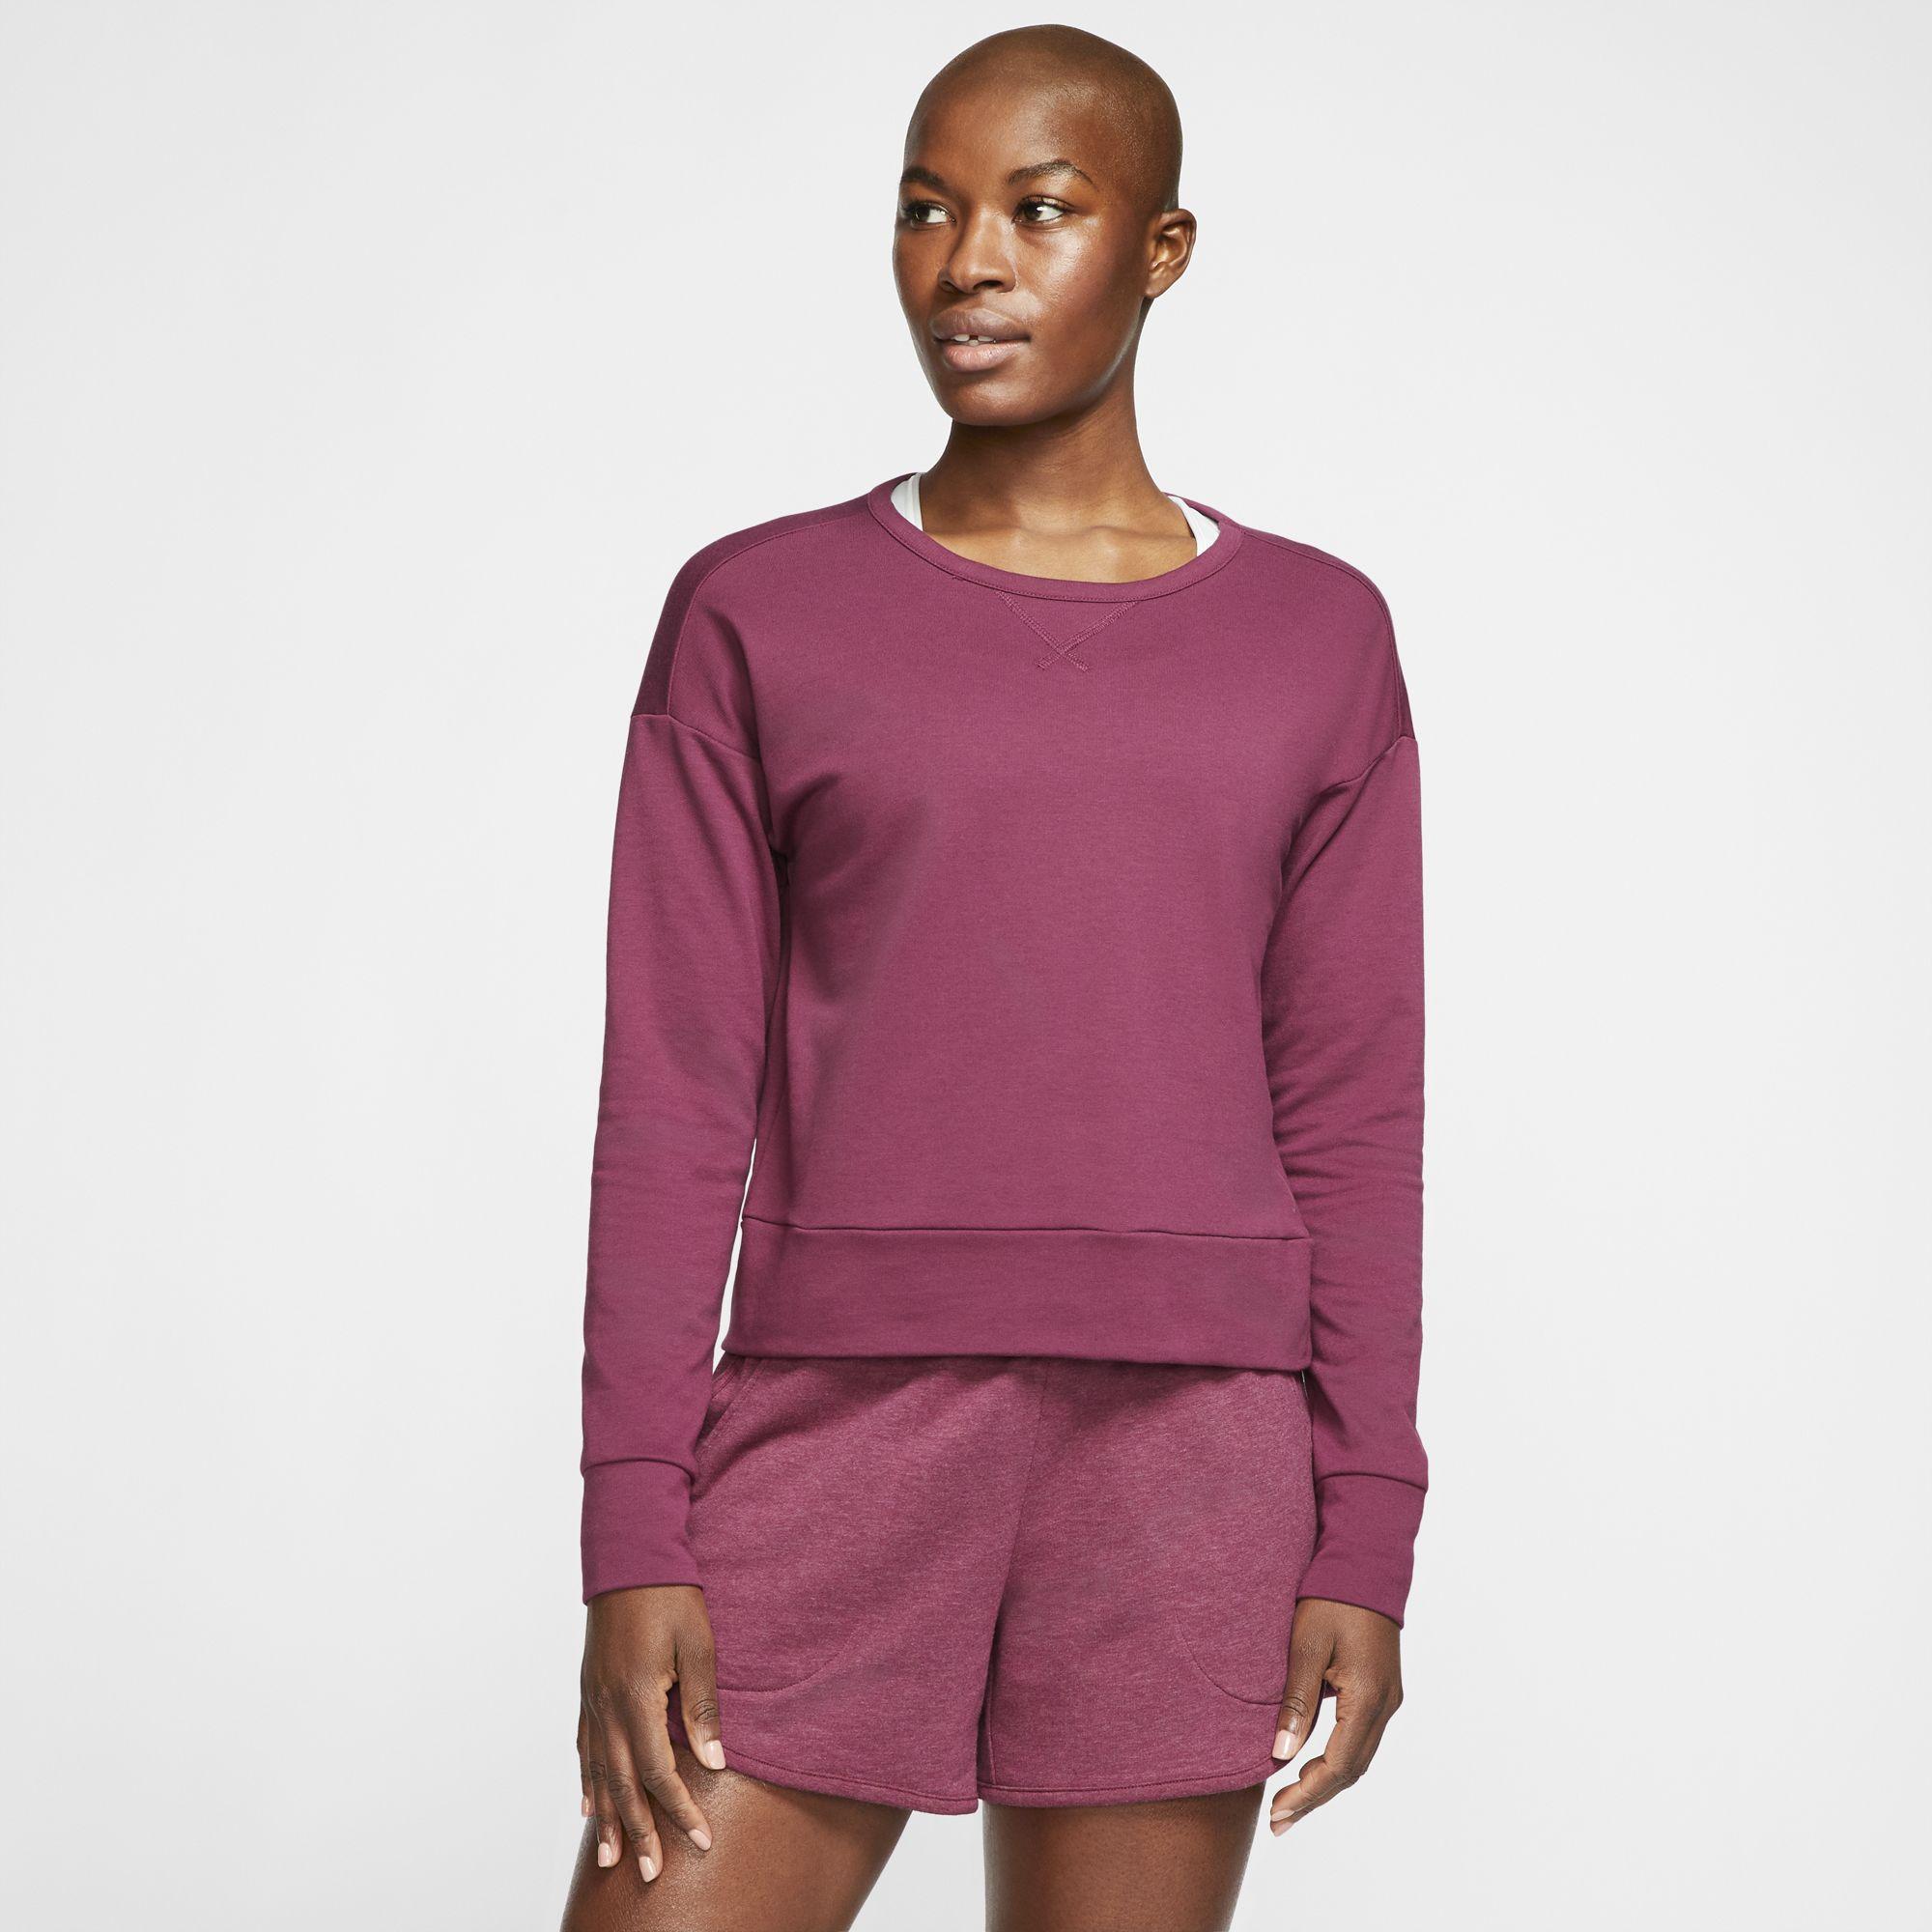 Nike Womens Yoga Long Sleeved Top - Crimson - Tennisnuts.com